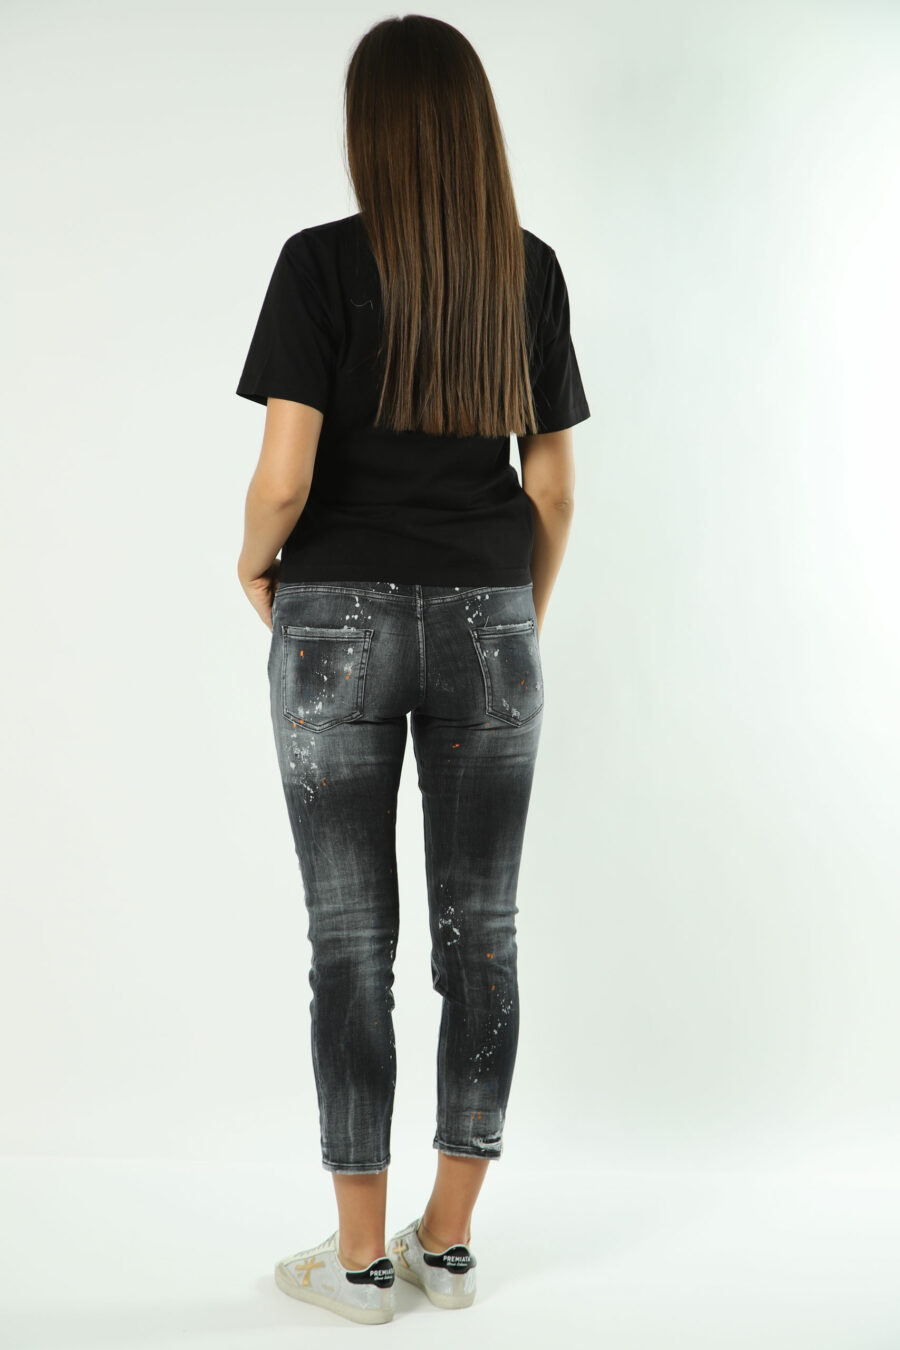 Jeans preto "cool girl" com pintura multicolorida - Fotos 1541